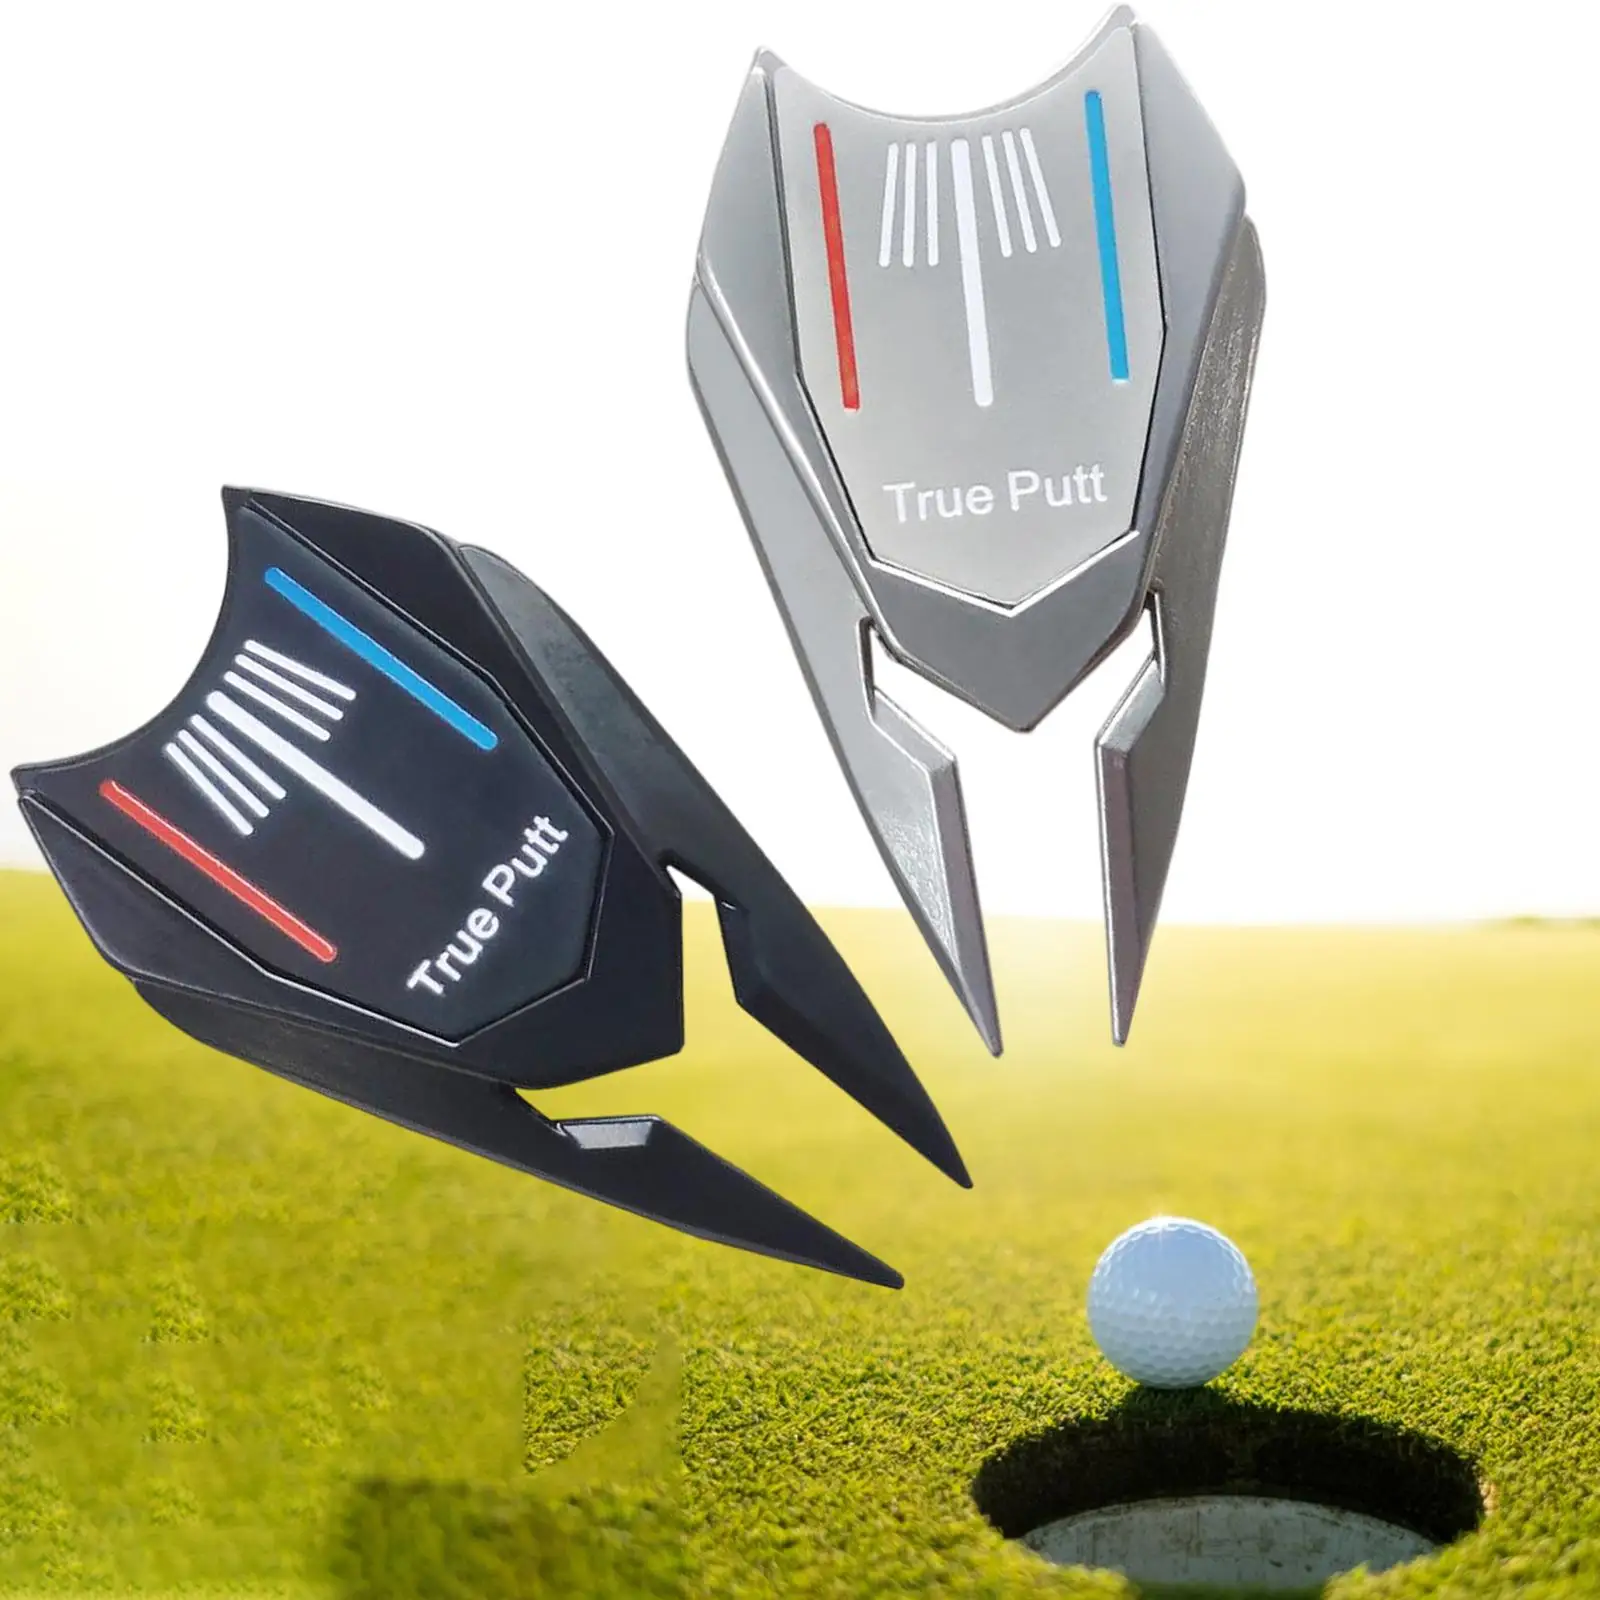 Golf Fork Golf Ball Marker Alignment Tool Golf Equipment Multi-functional Putt Parter Help for